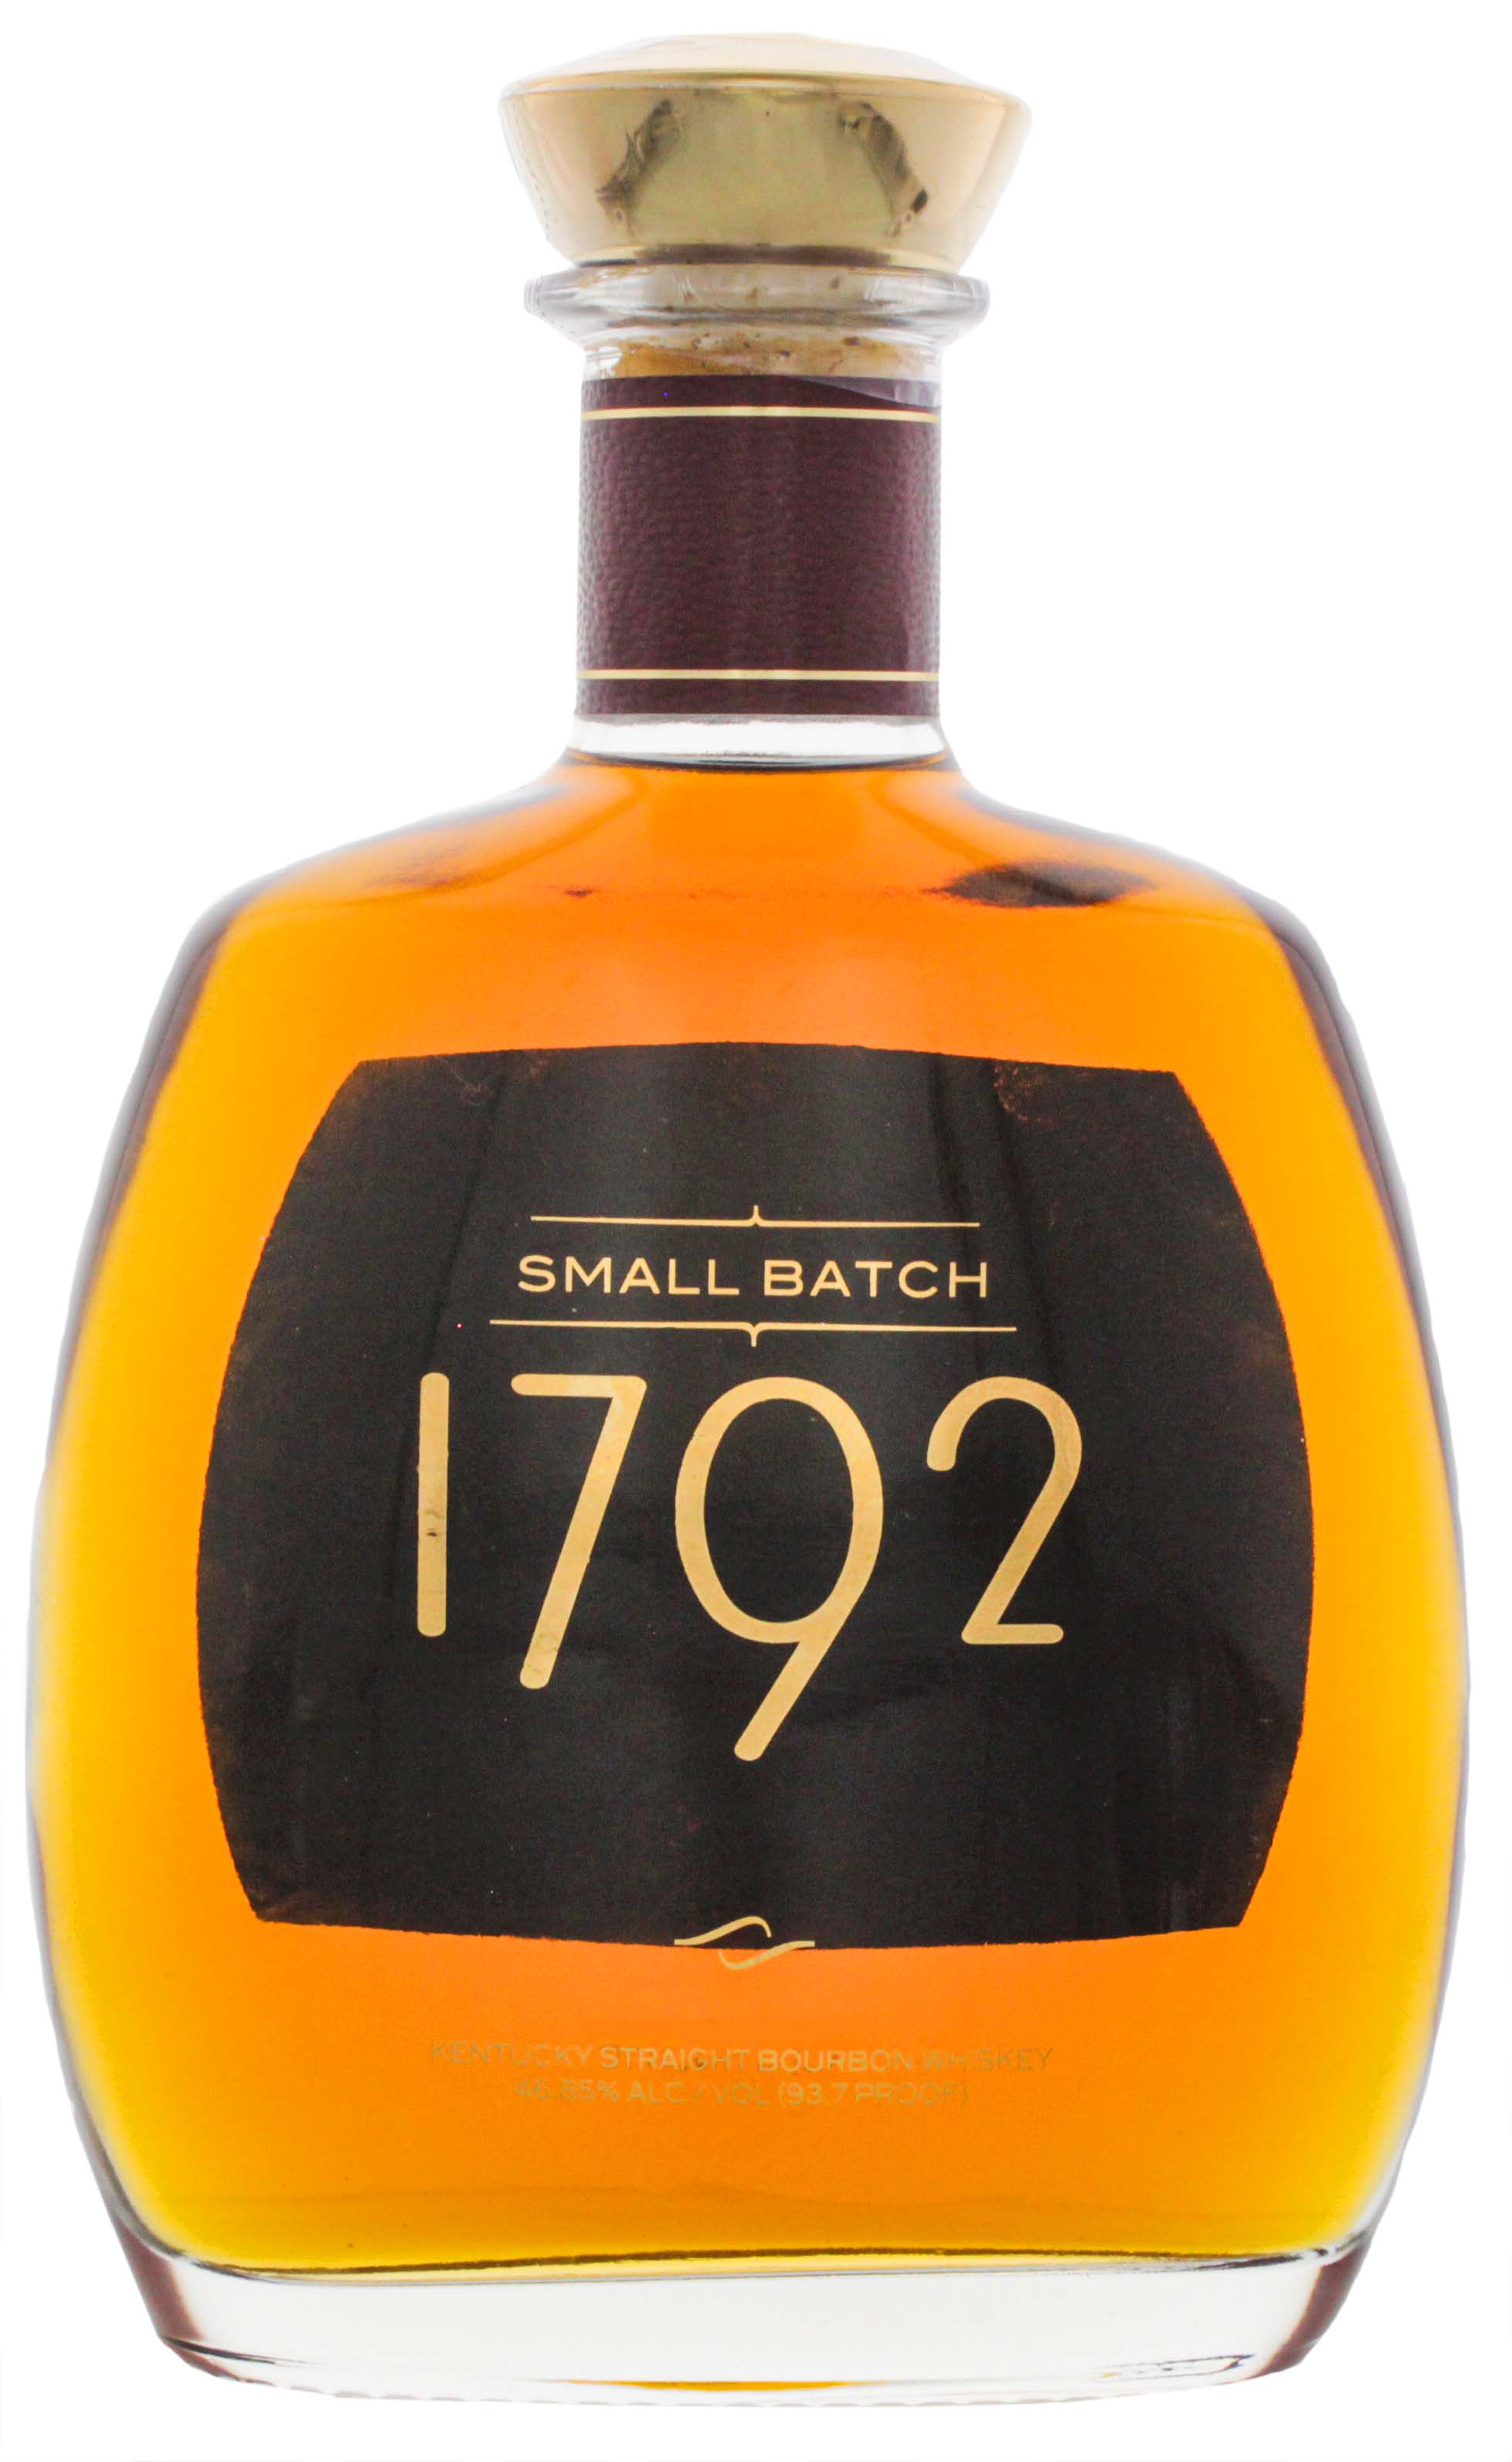 1792 Small Batch Kentucky Straight Bourbon Whiskey 0,7L kaufen! Whisky